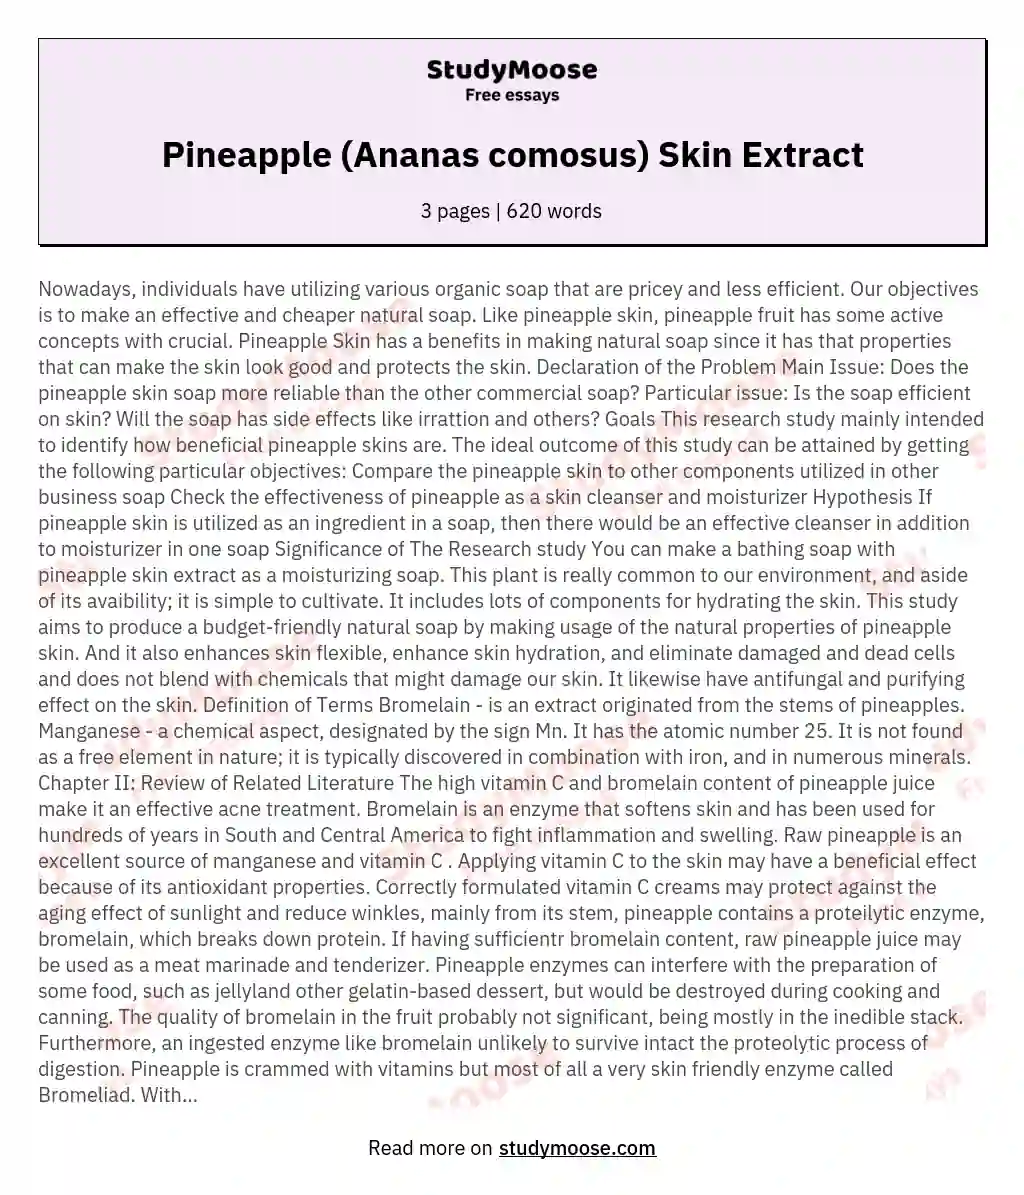 Pineapple (Ananas comosus) Skin Extract essay